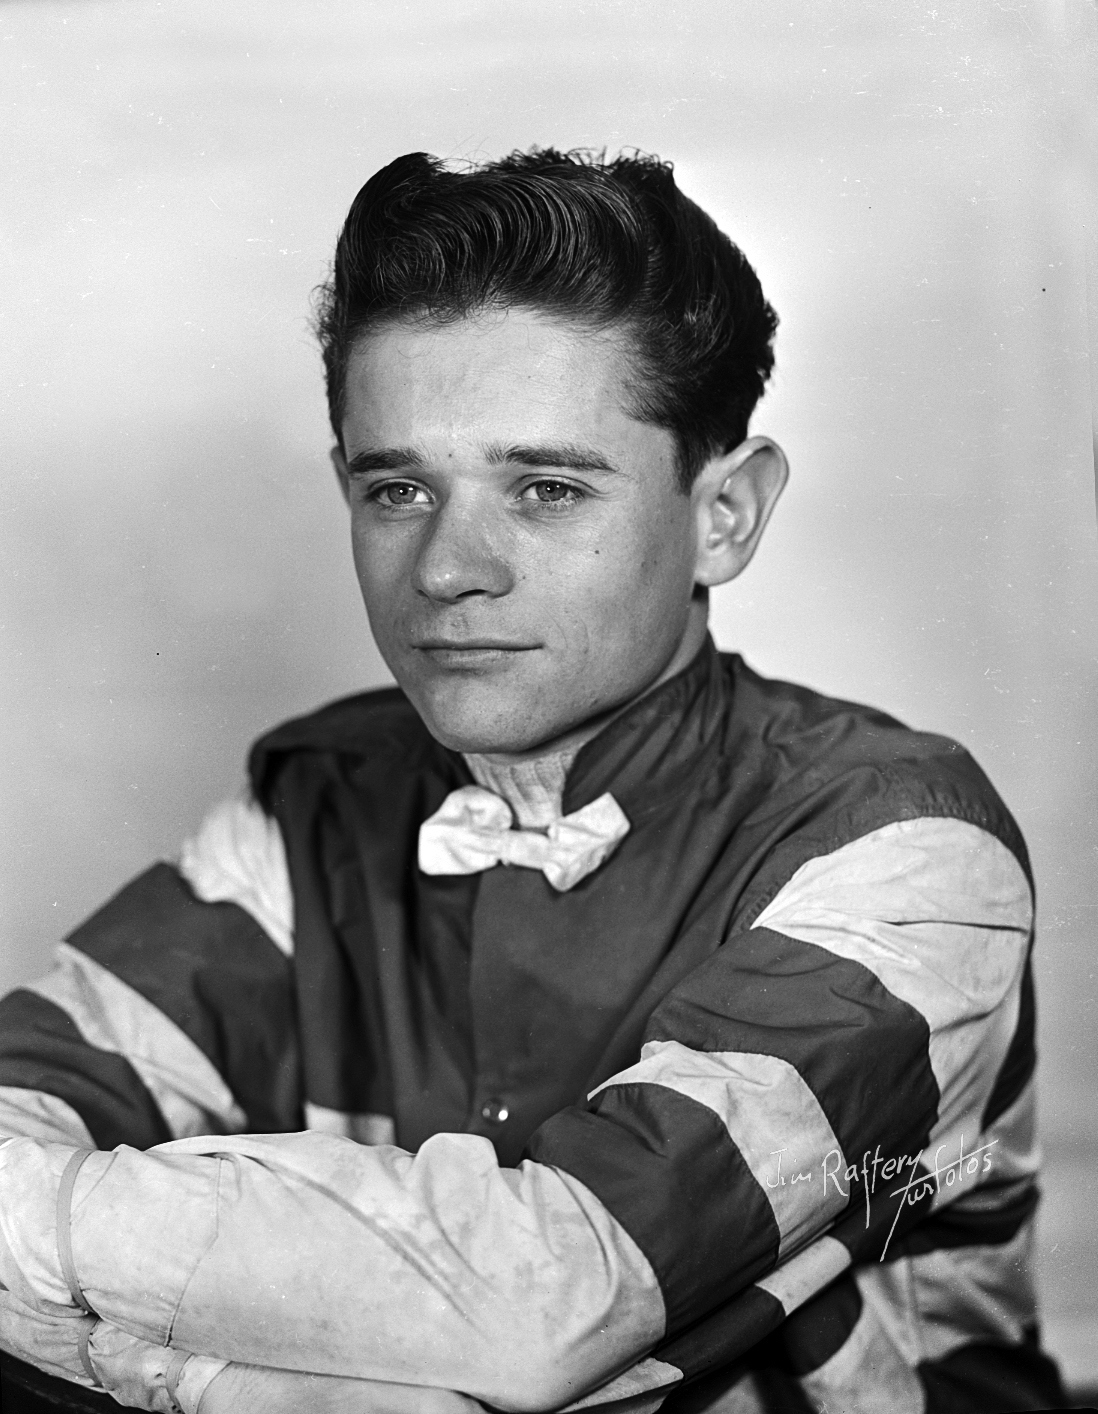 Arthur Sherman, jockey, May 11, 1959. Decades later, he would gain far more fam as the trainer of California Chrome. (Jim Raftery Turfotos)